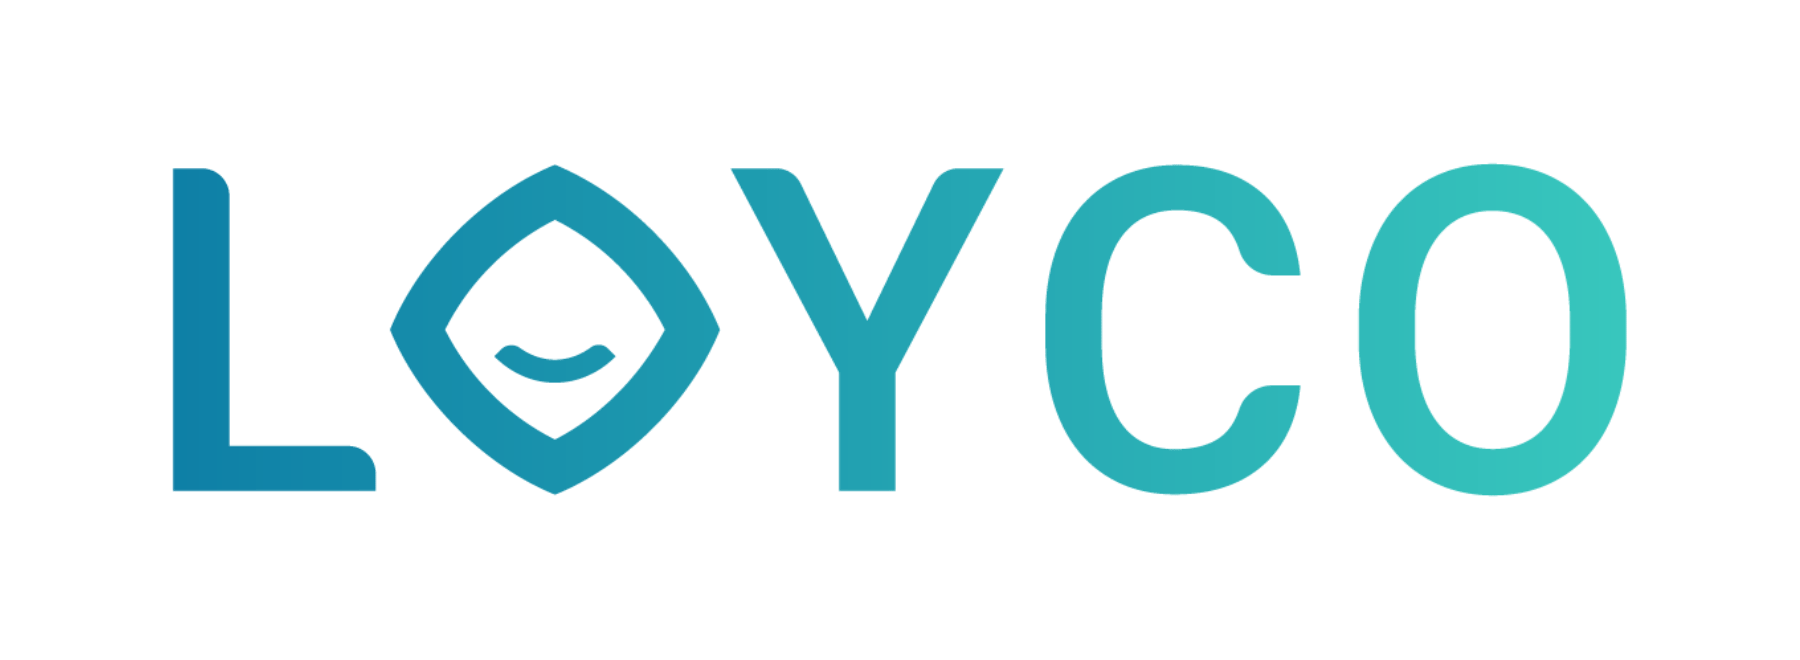 loyco-logo